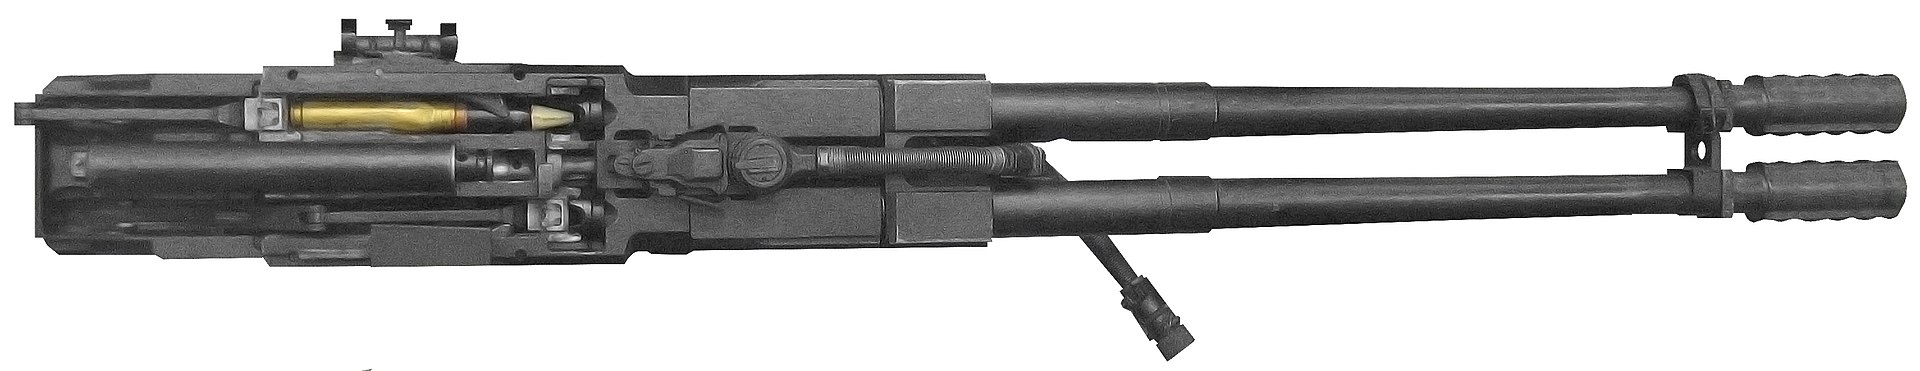 1920px-GSh-23L_cannon.jpg